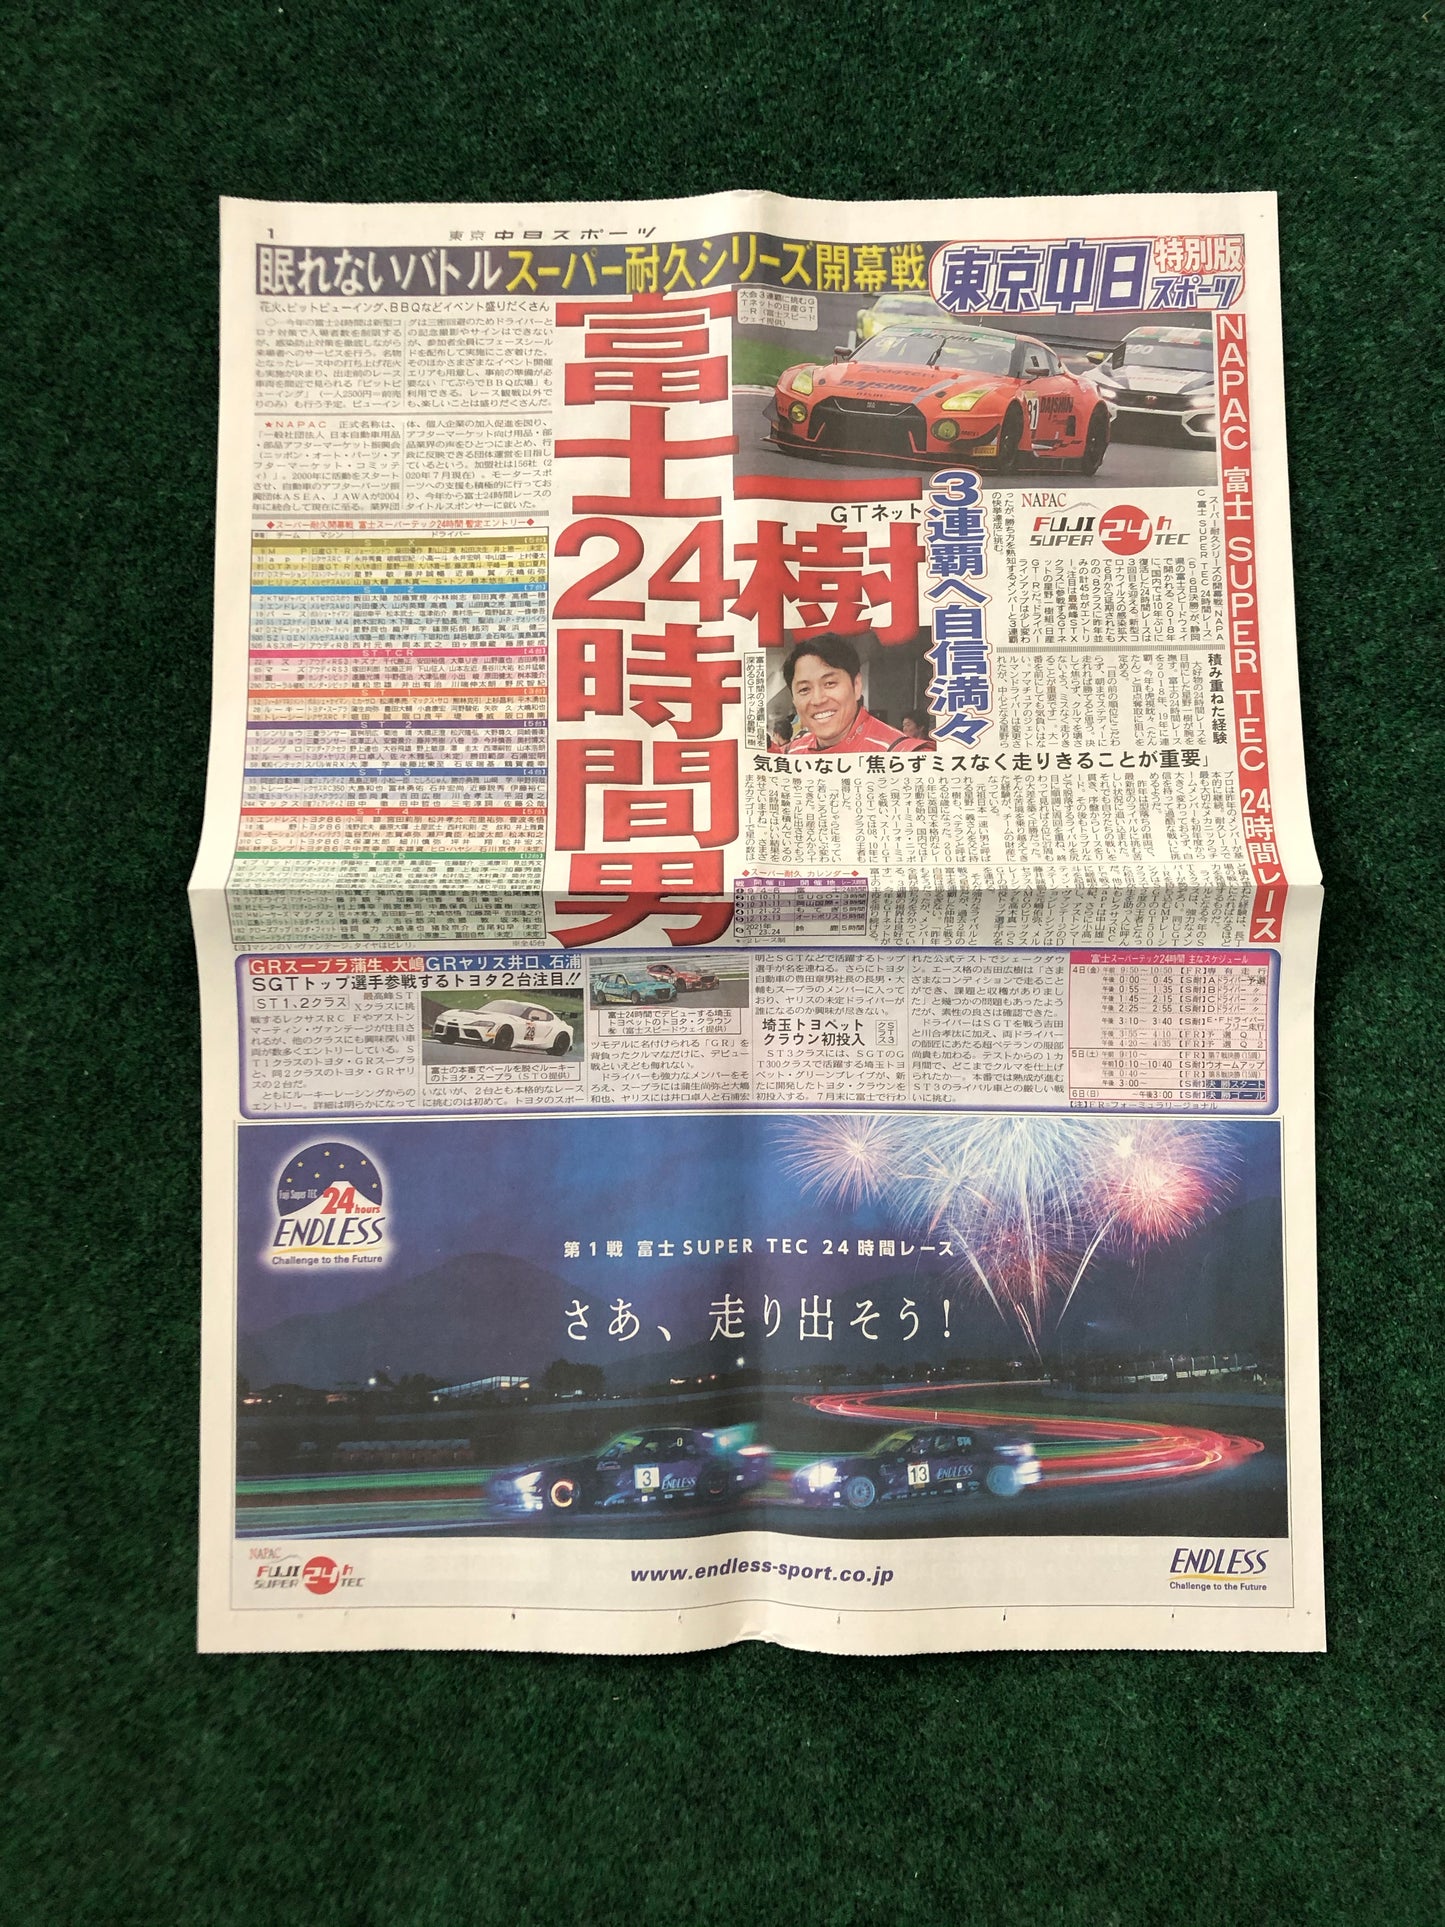 Super Taikyu 2020 - Motorsport Newspaper Feature - Tokyo Chunichi Shimbun Sports